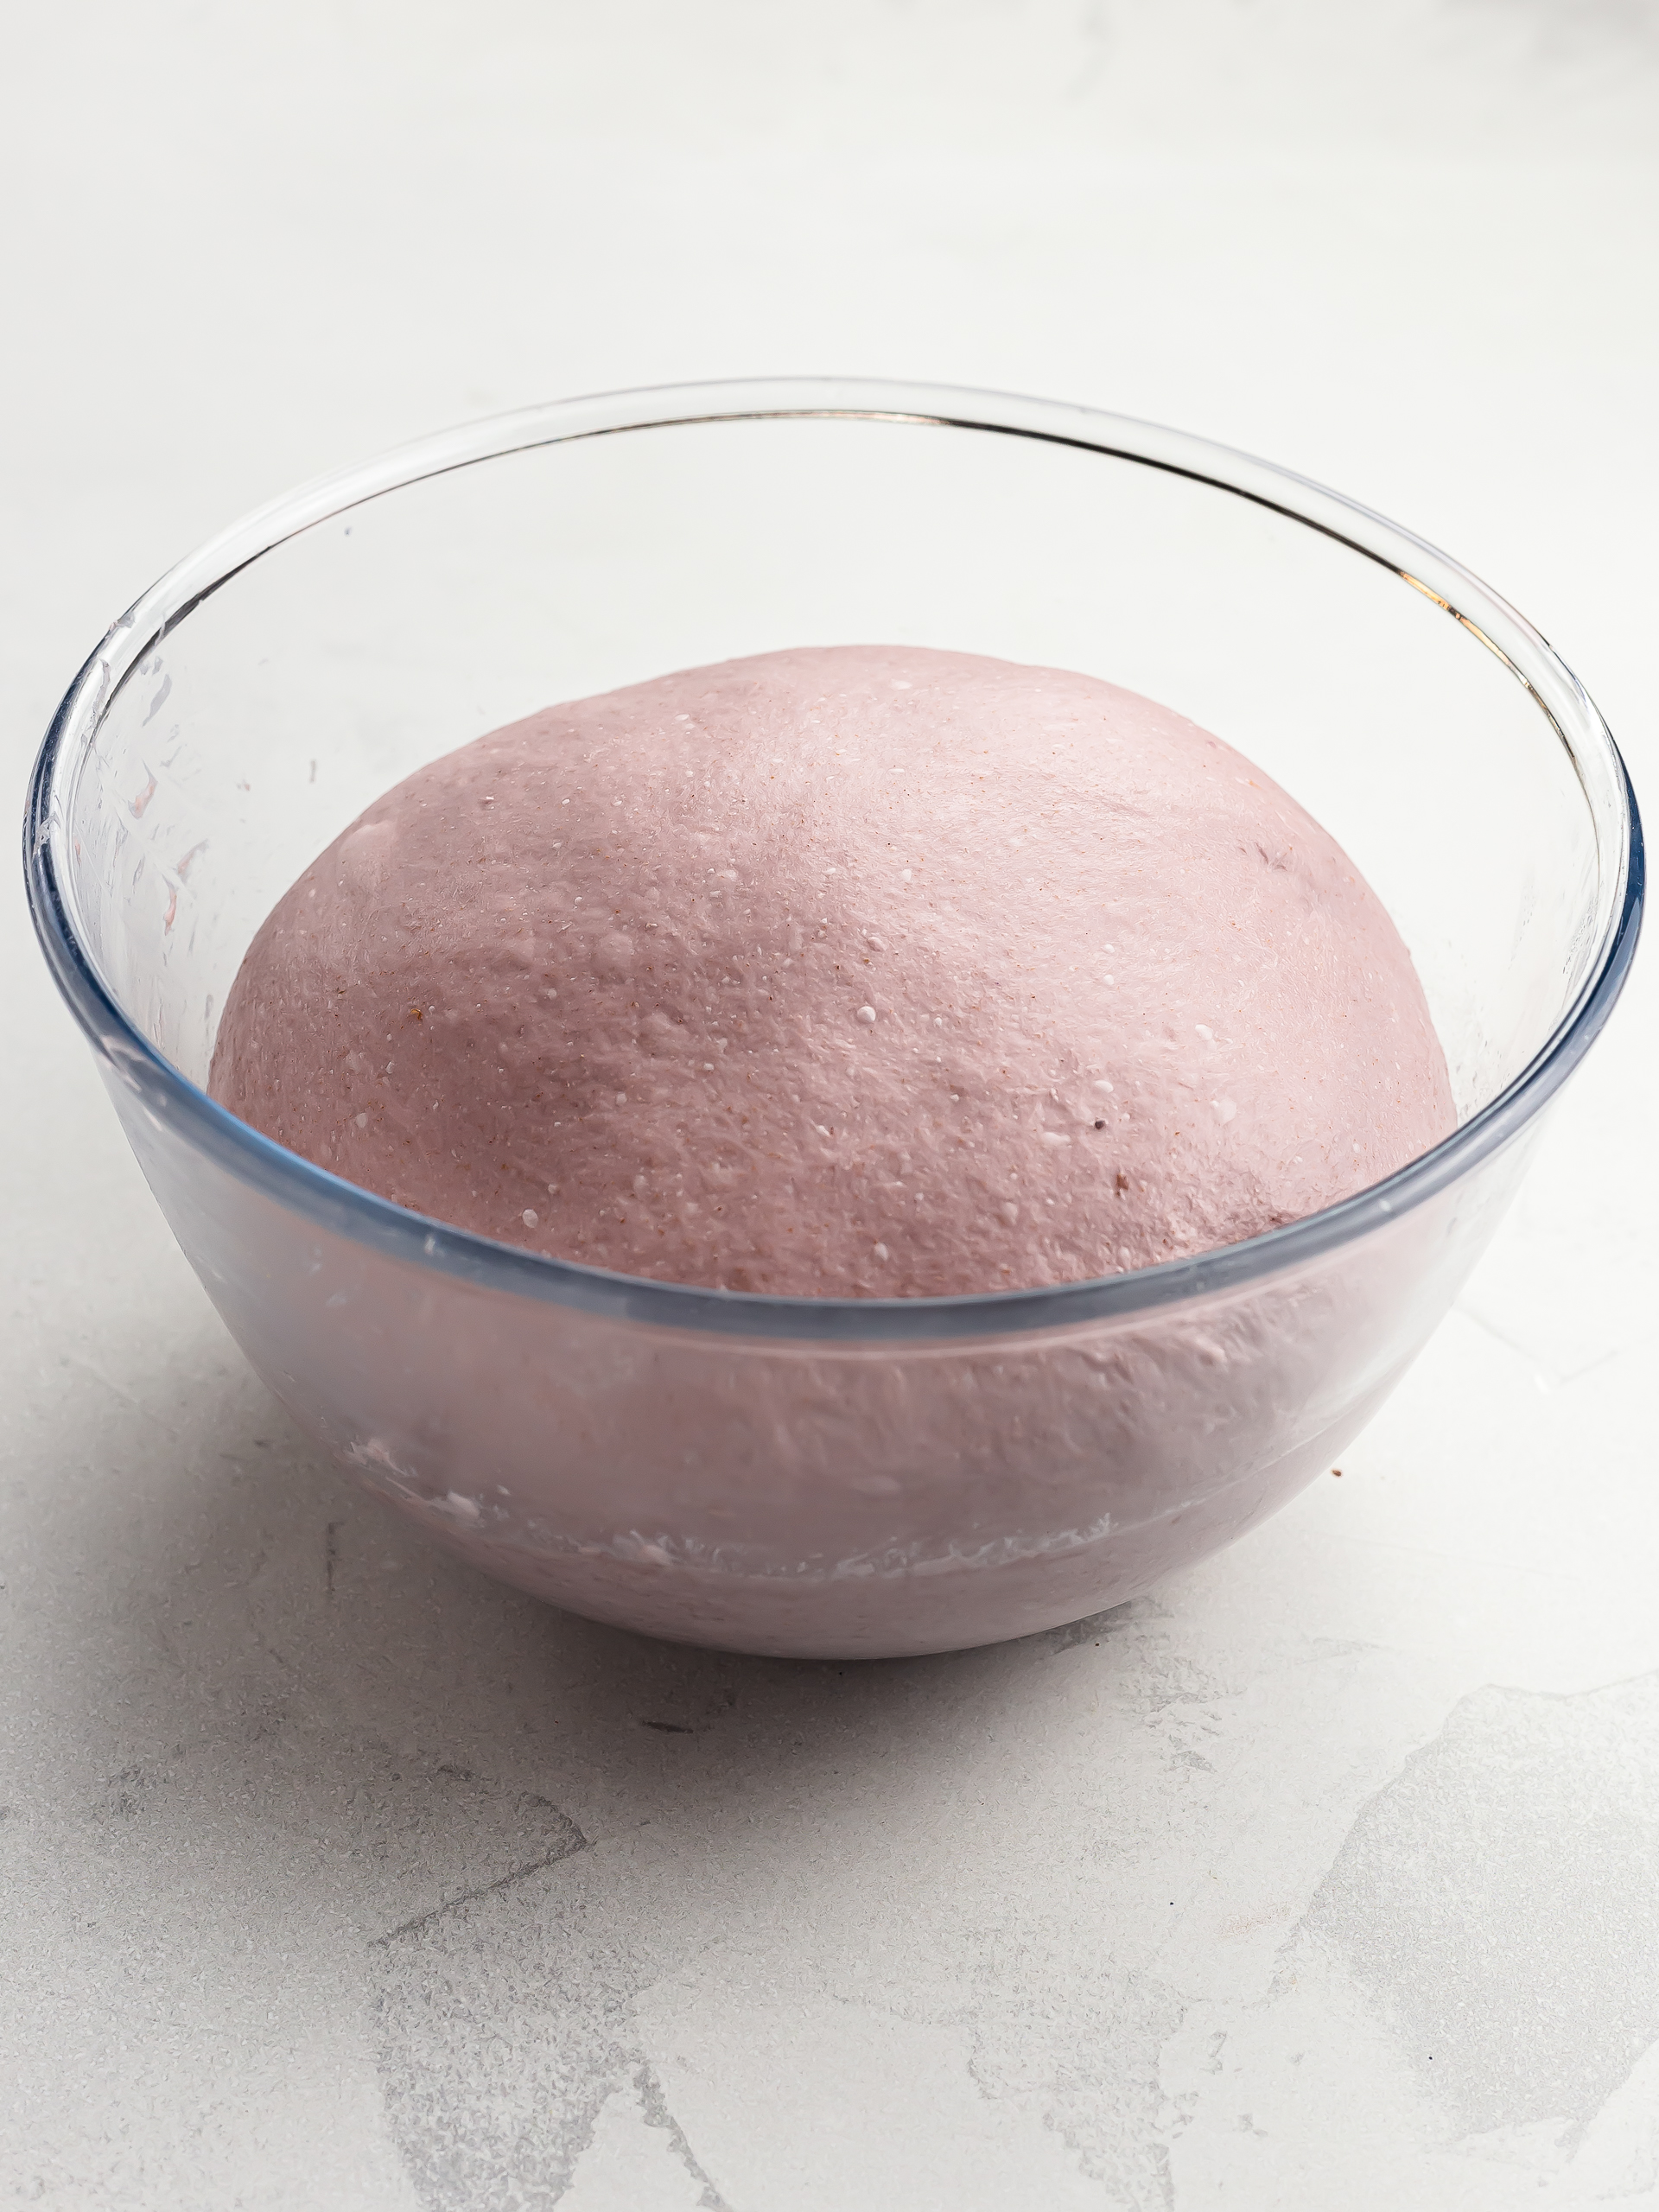 ube bread dough proving in a bowl